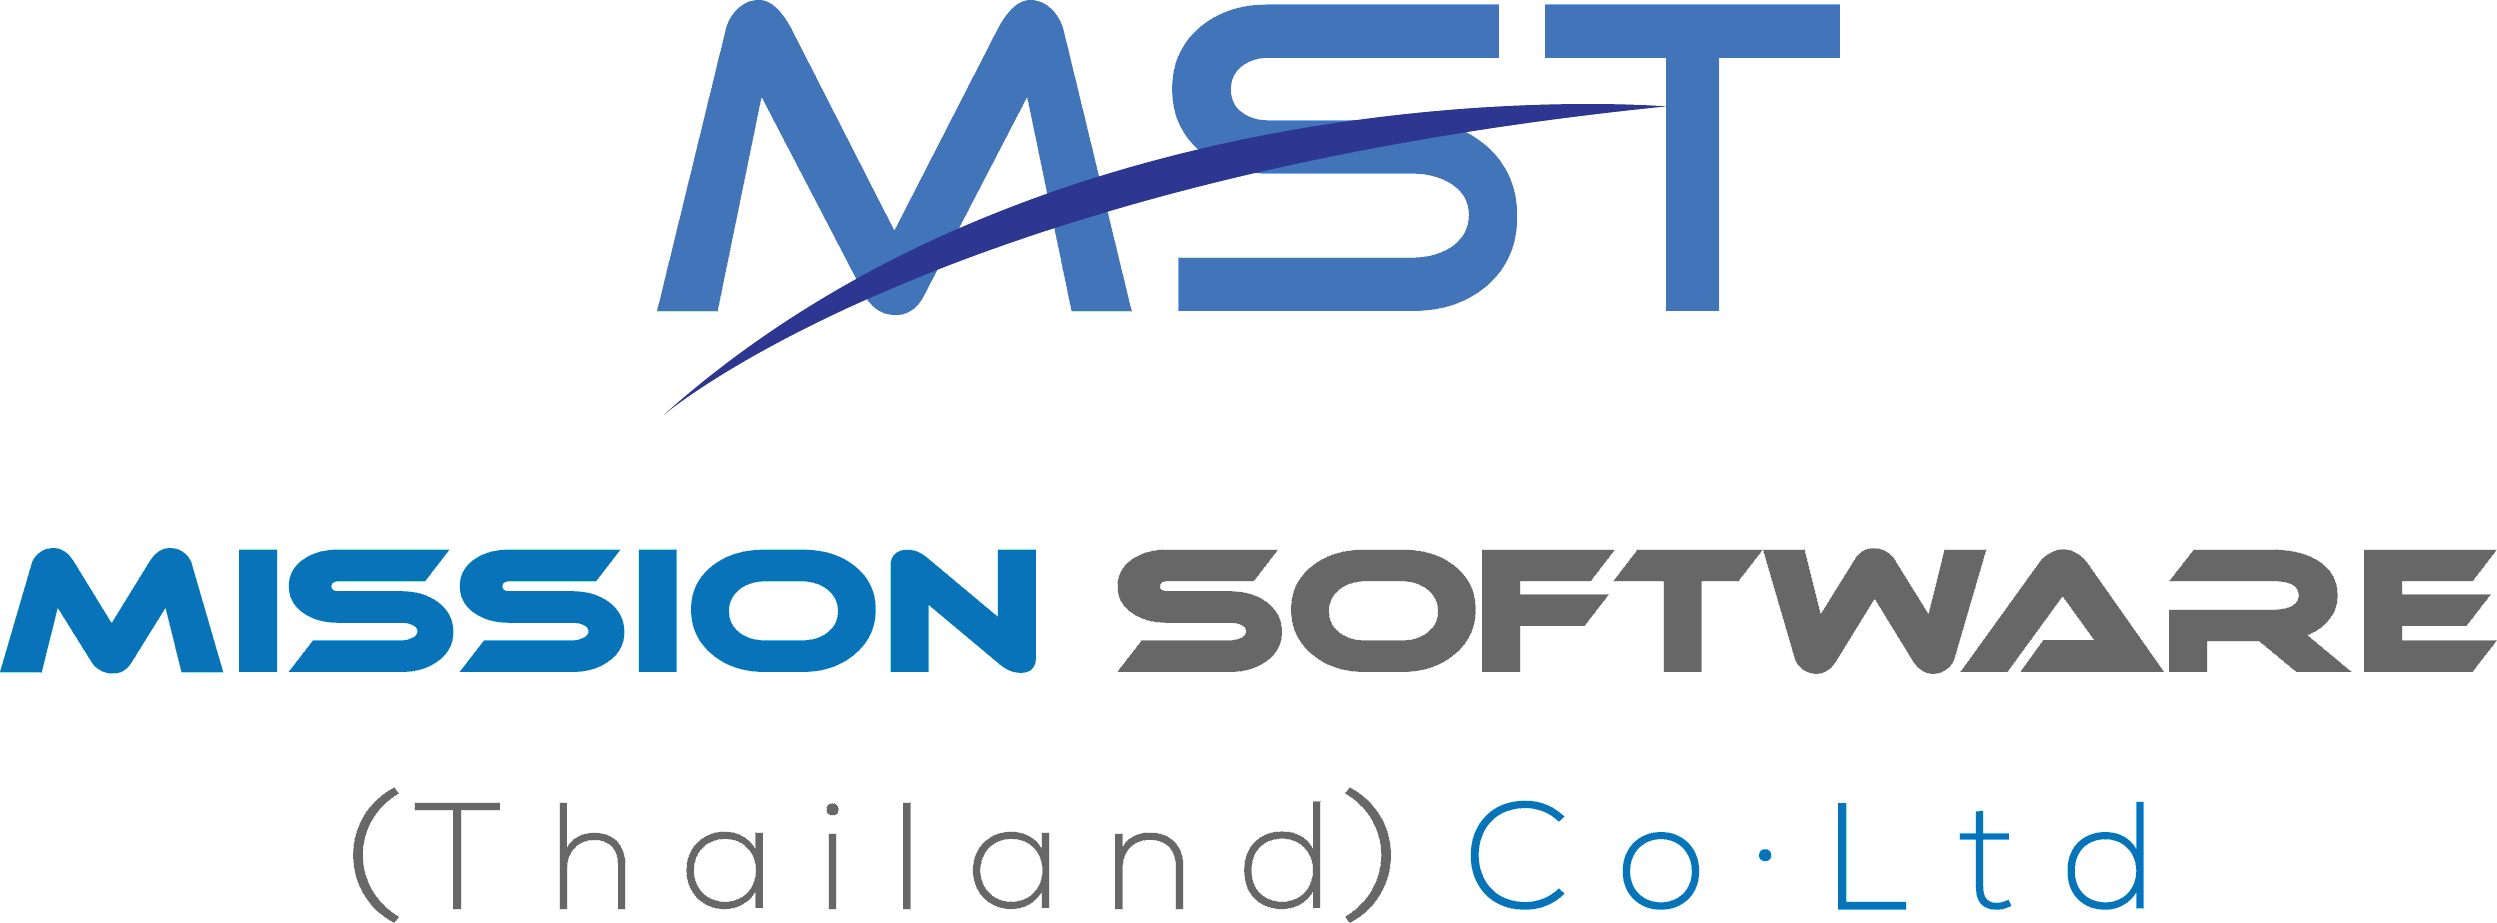 Mission Software Thailand site